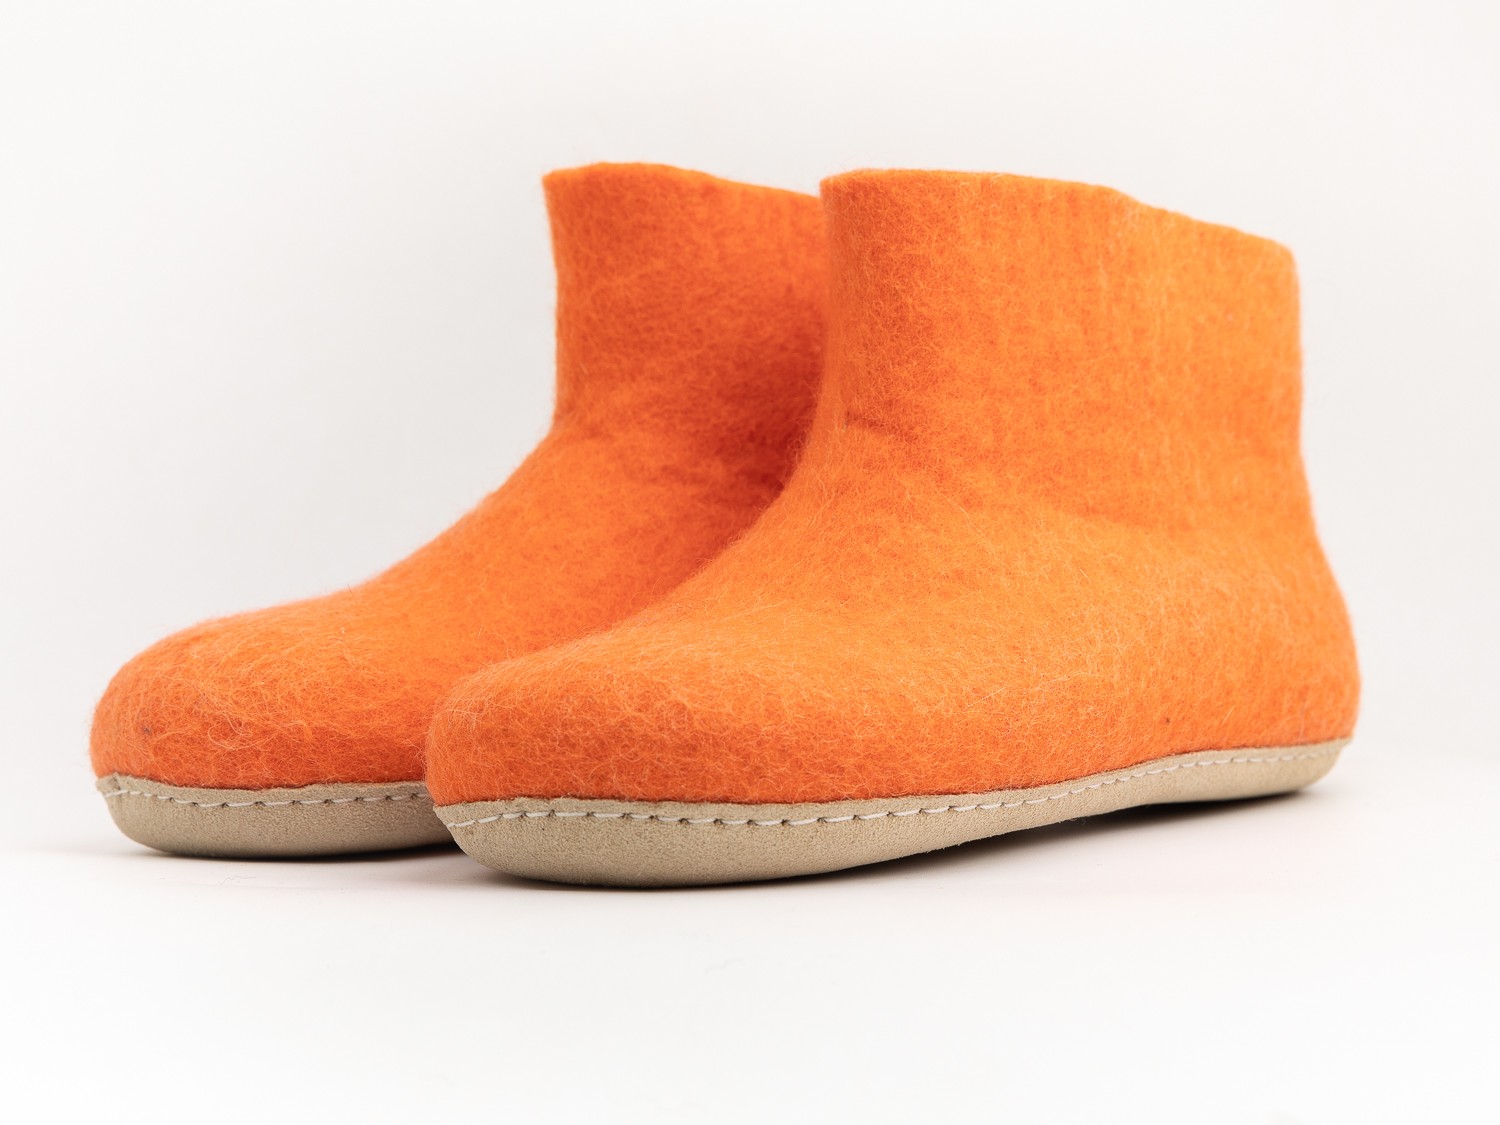 Orange Felt Slipper Boots with Suede Soles